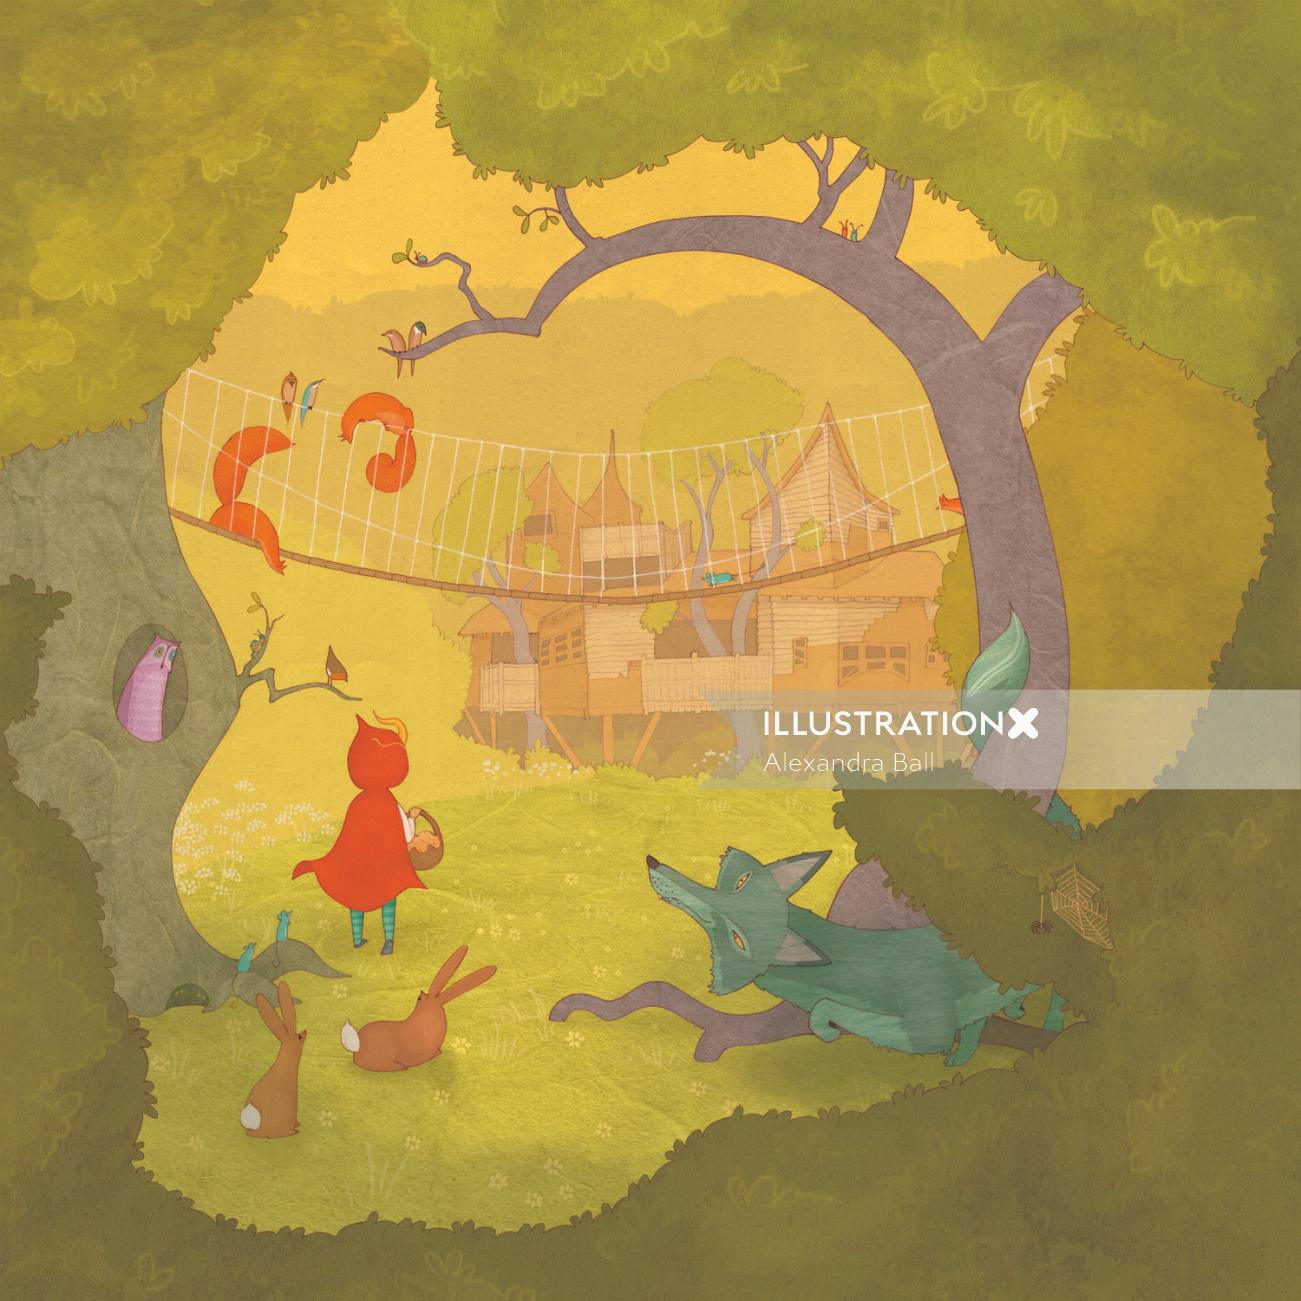 Book Illustration of Alnwick Garden: Tree house